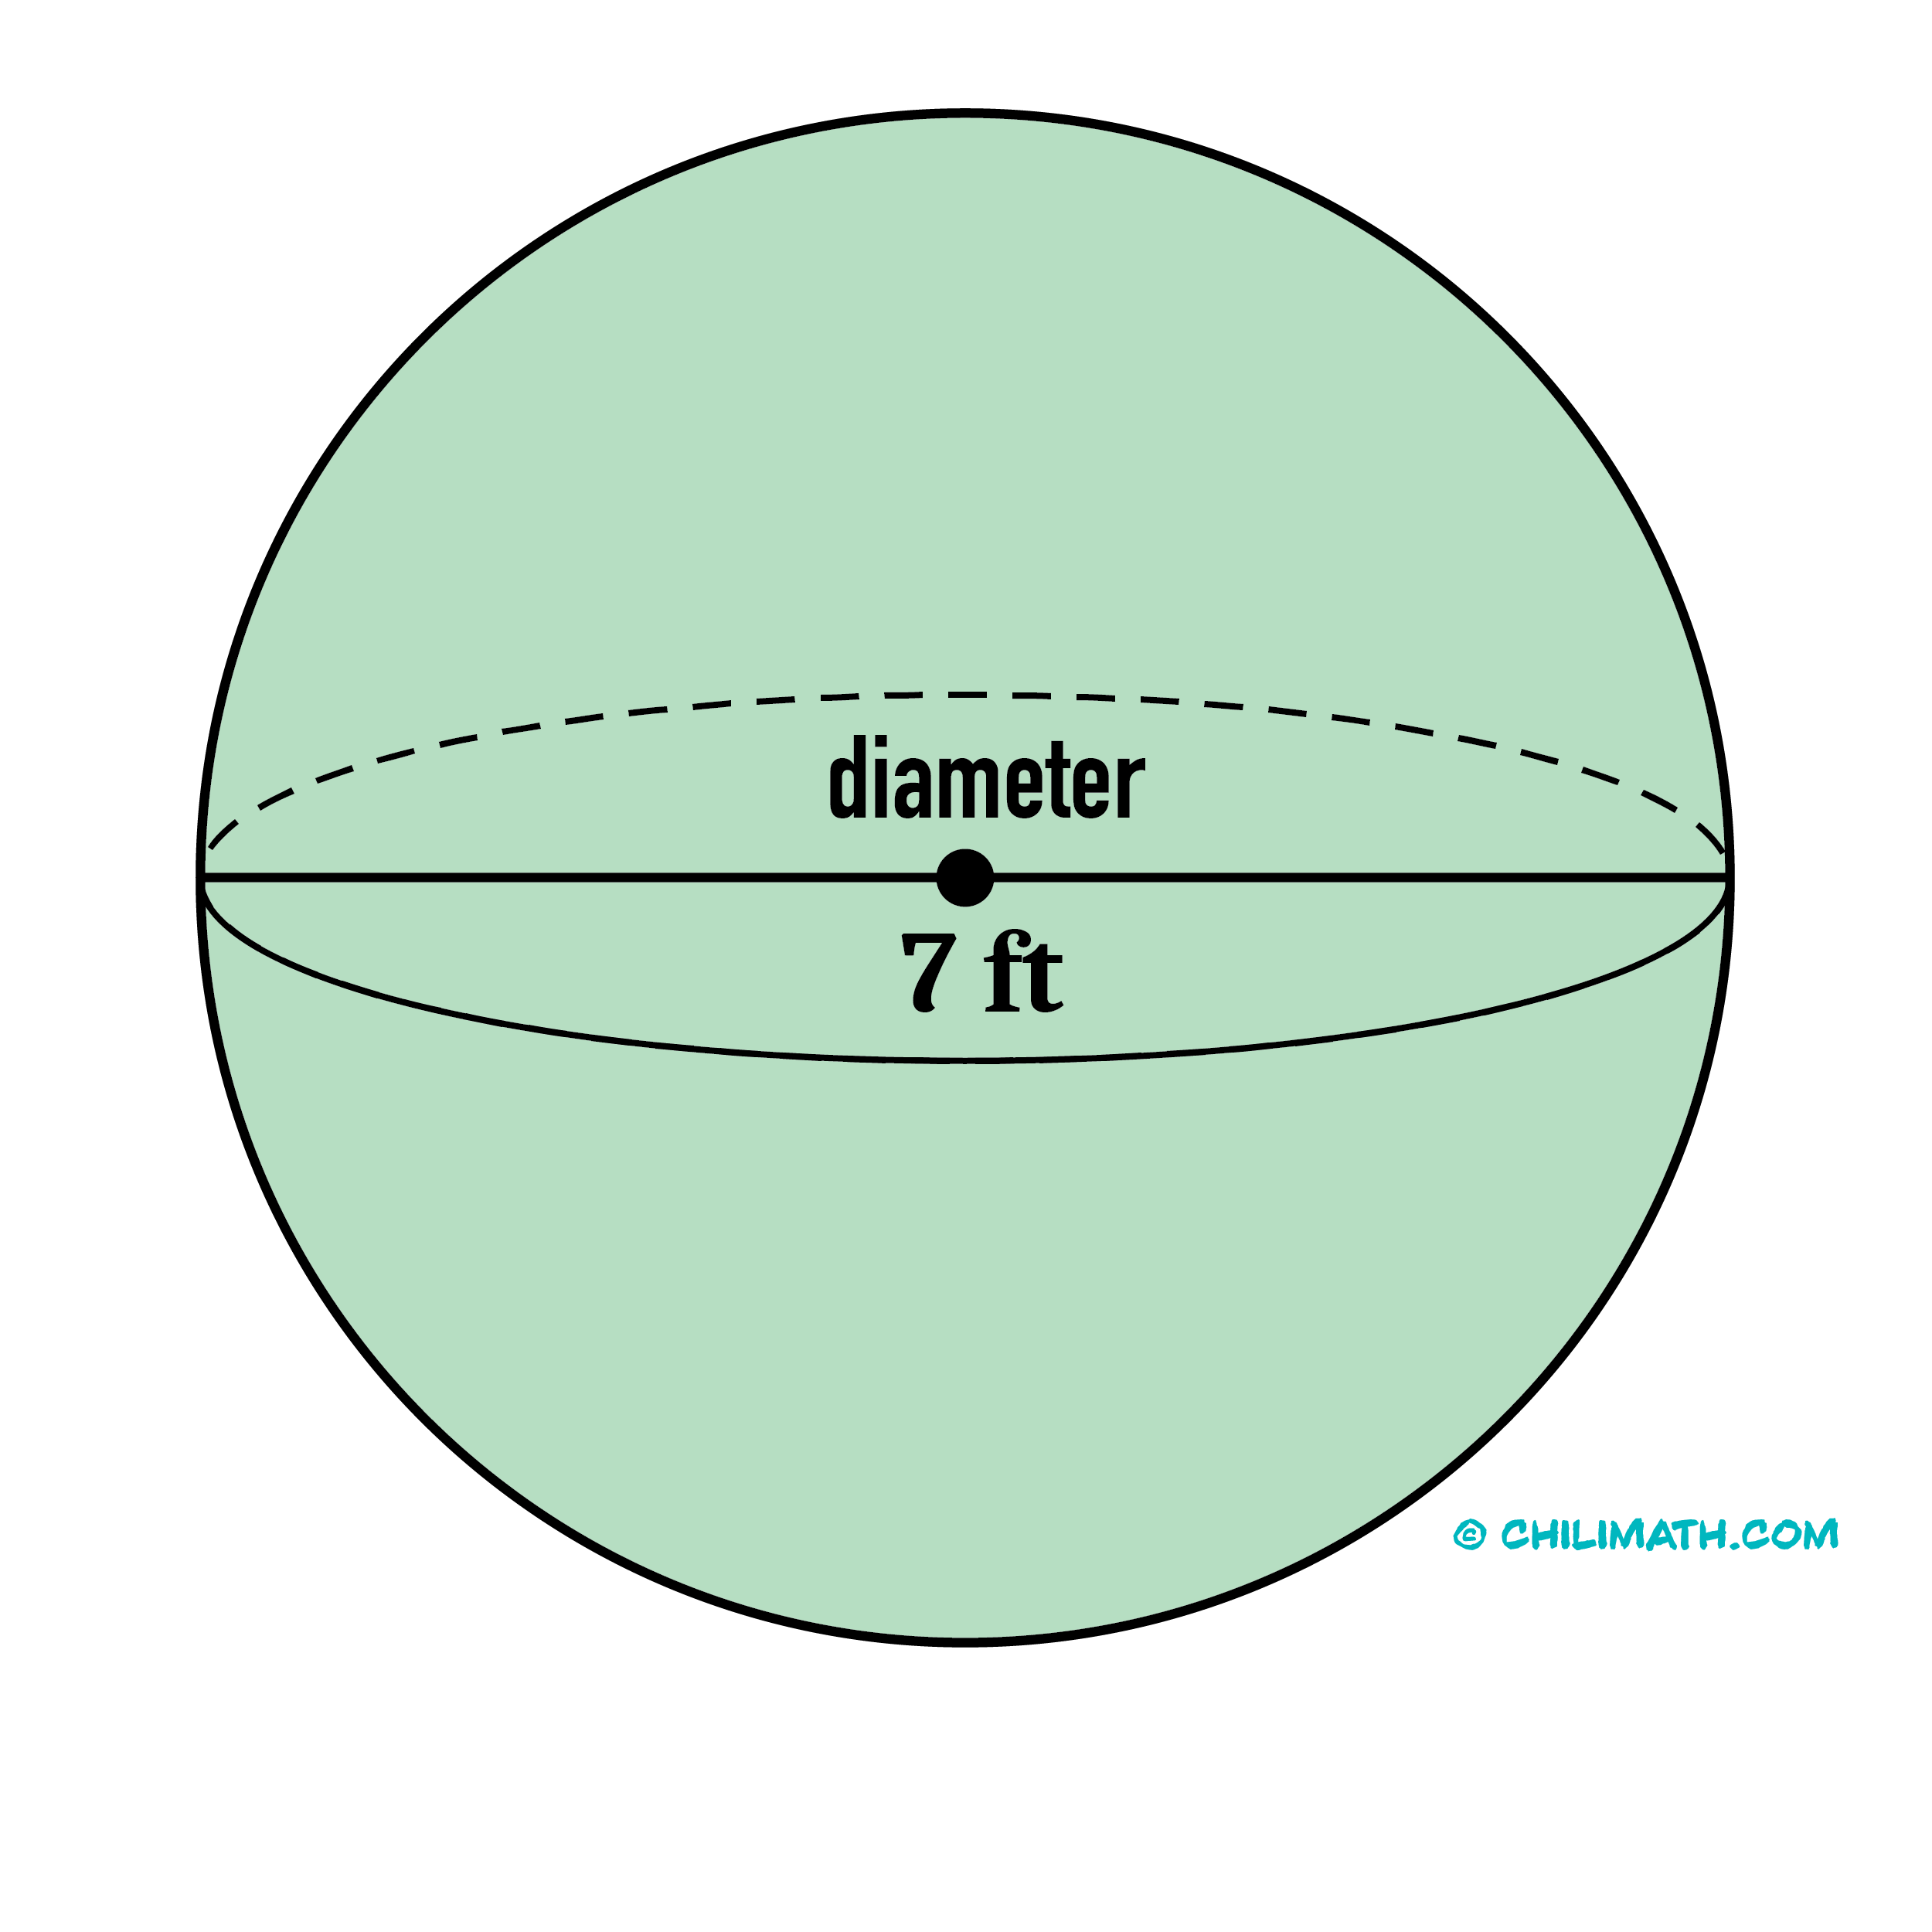 a light green sphere with a diameter of 7 feet